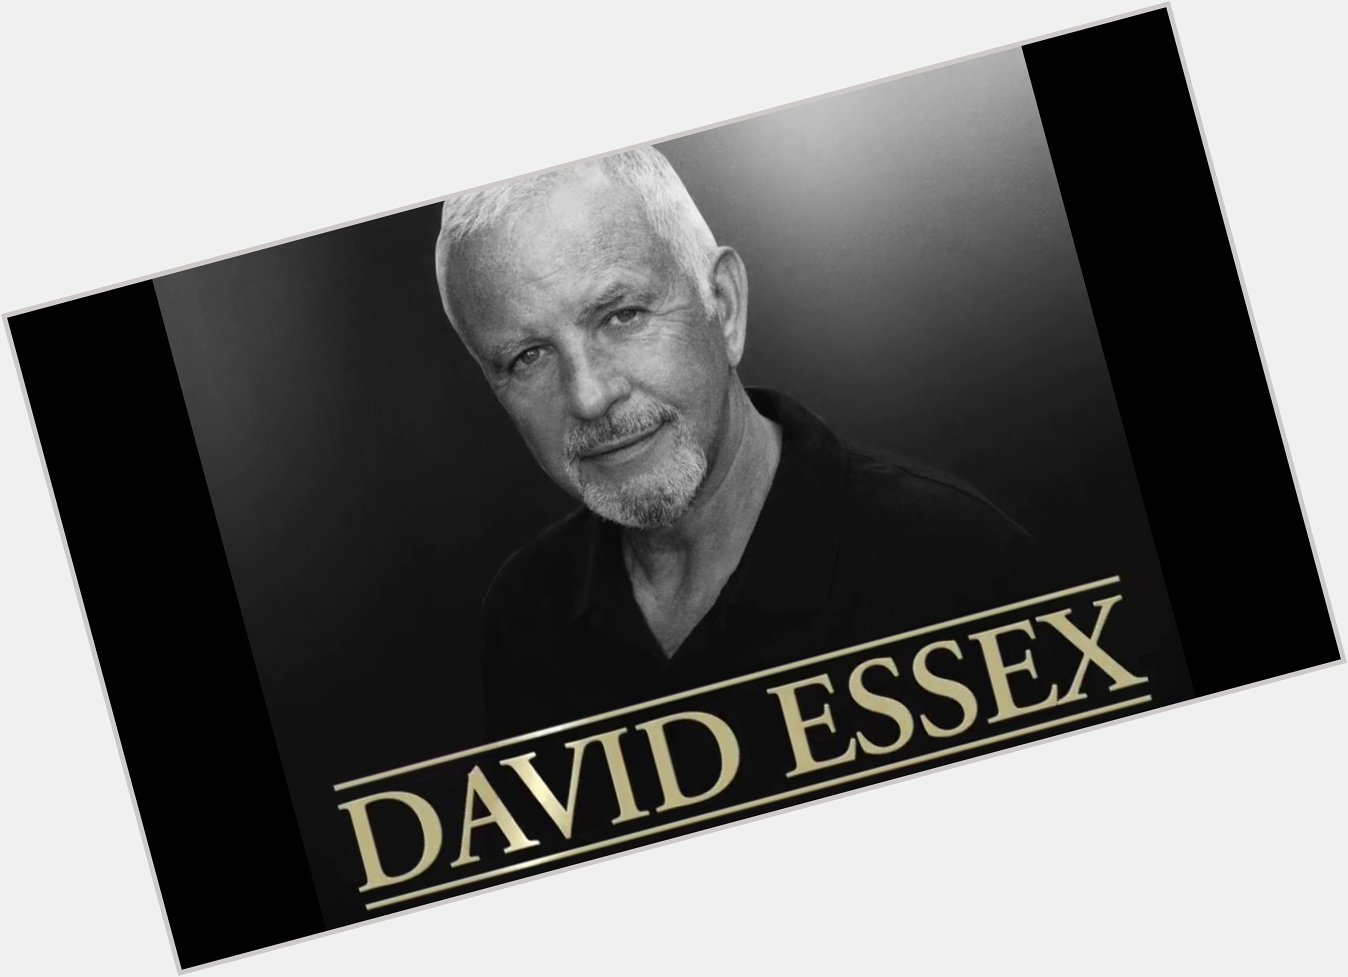  Rock ON!  Happy Birthday today 7/23 to singer David Essex!   